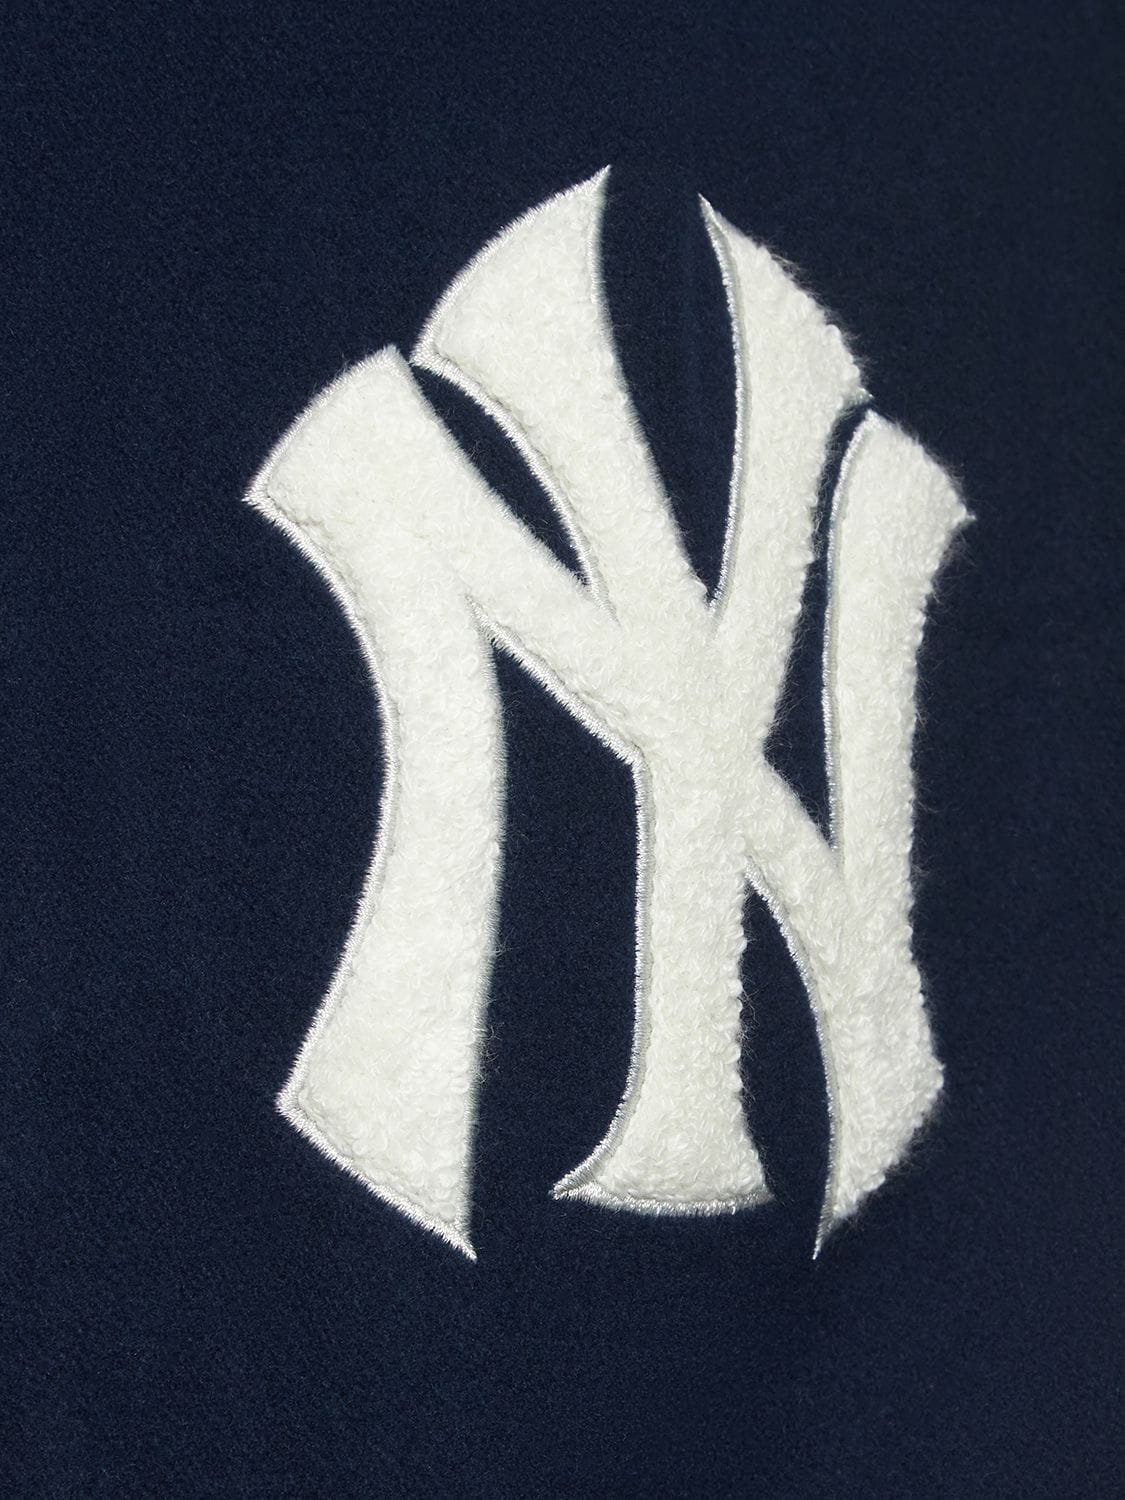 NY Yankees Black and White Varsity Jacket